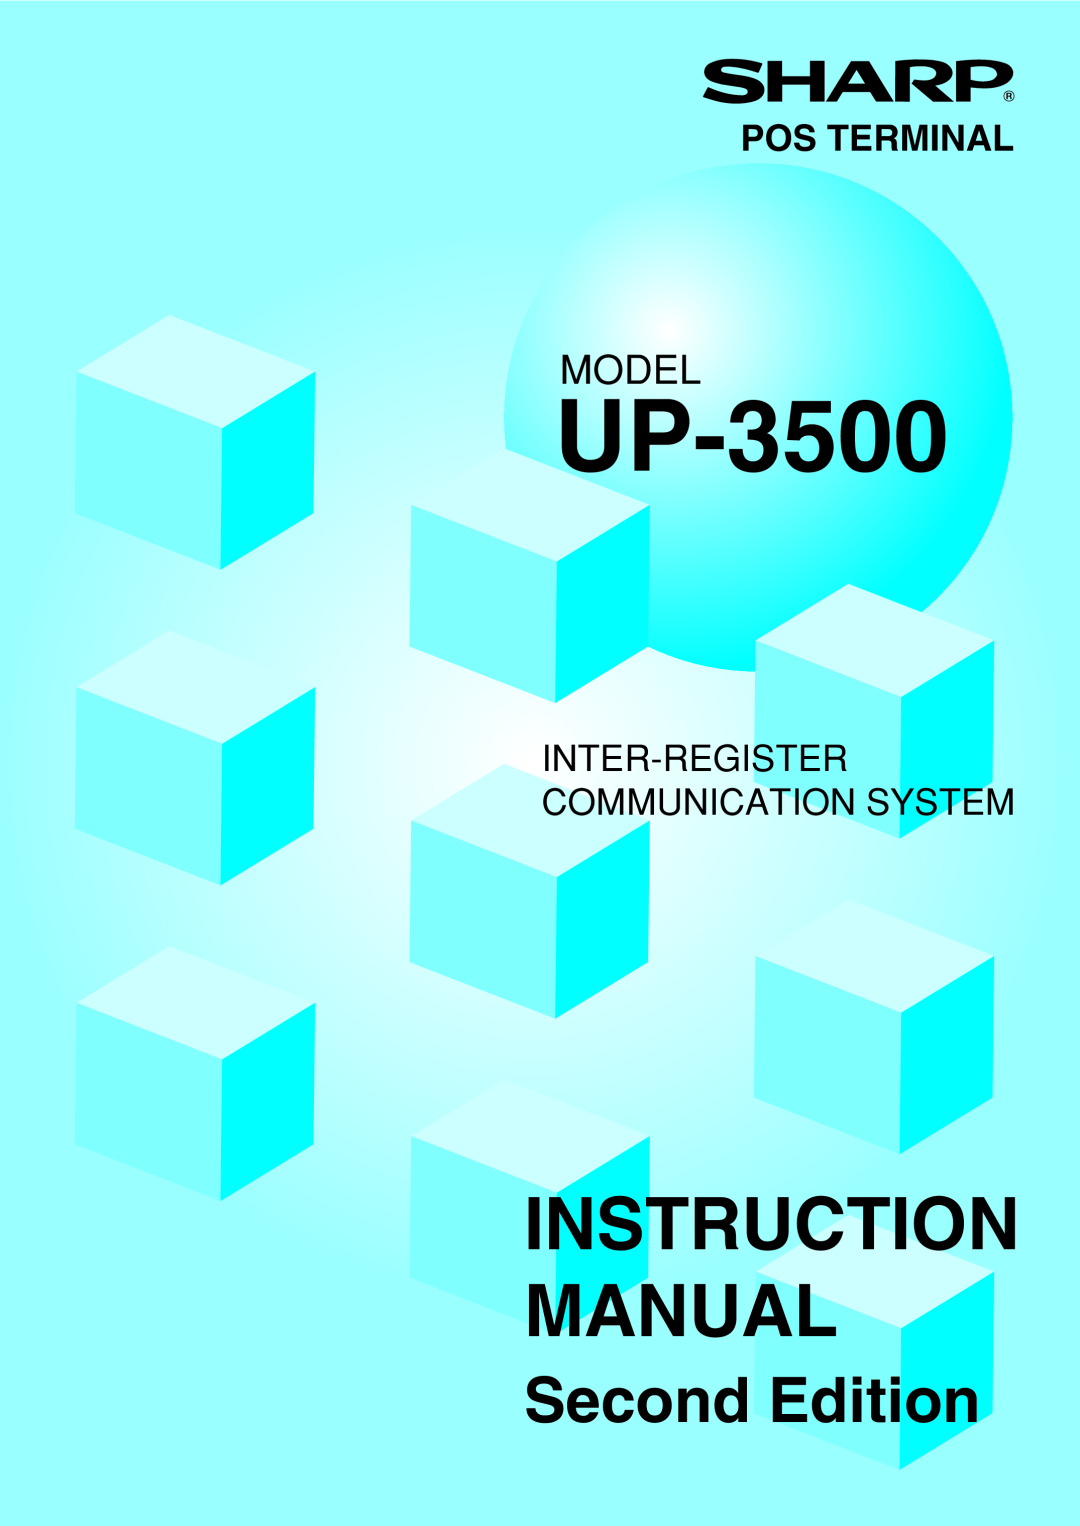 Sharp UP-3500 instruction manual Second Edition, Model, Pos Terminal, Inter-Registercommunication System 